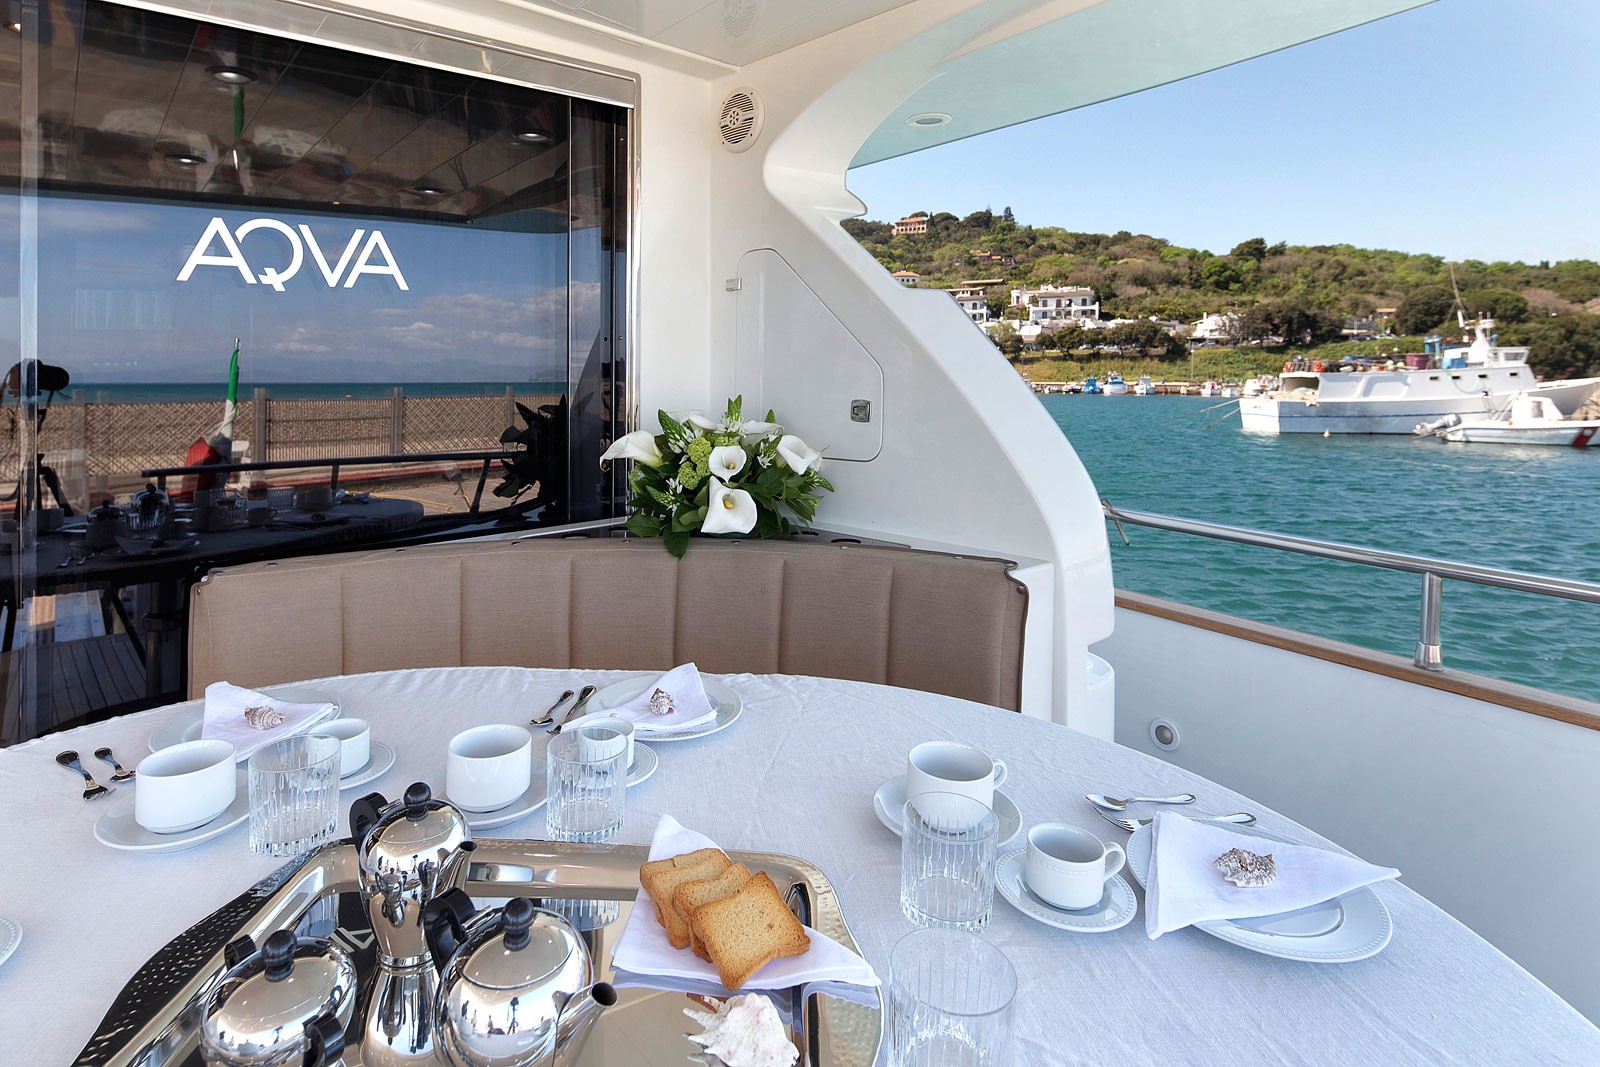 The 21m Yacht AQVA